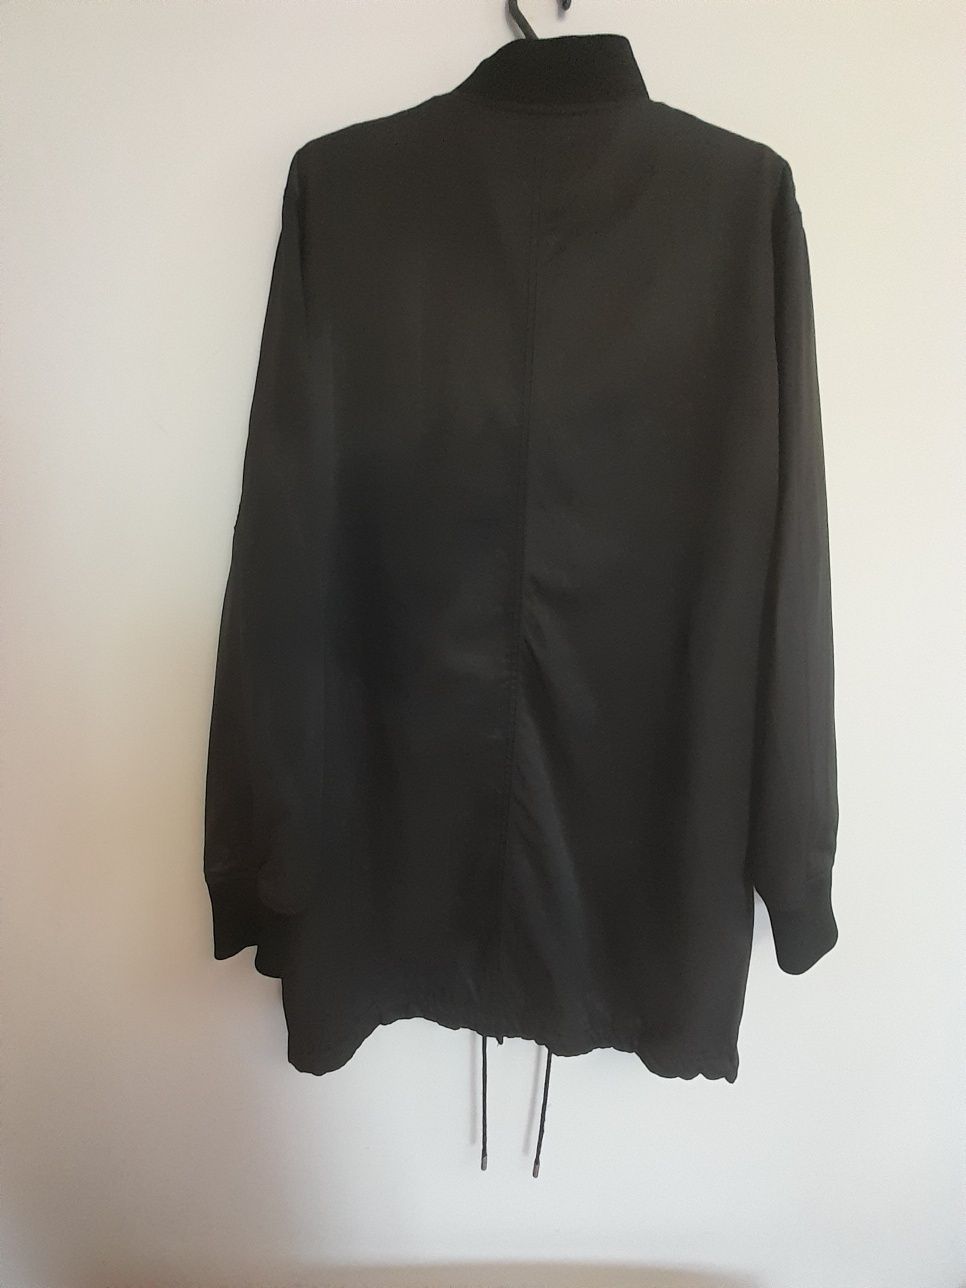 H&M удлинённая куртка бомбер чёрная размер L-XL